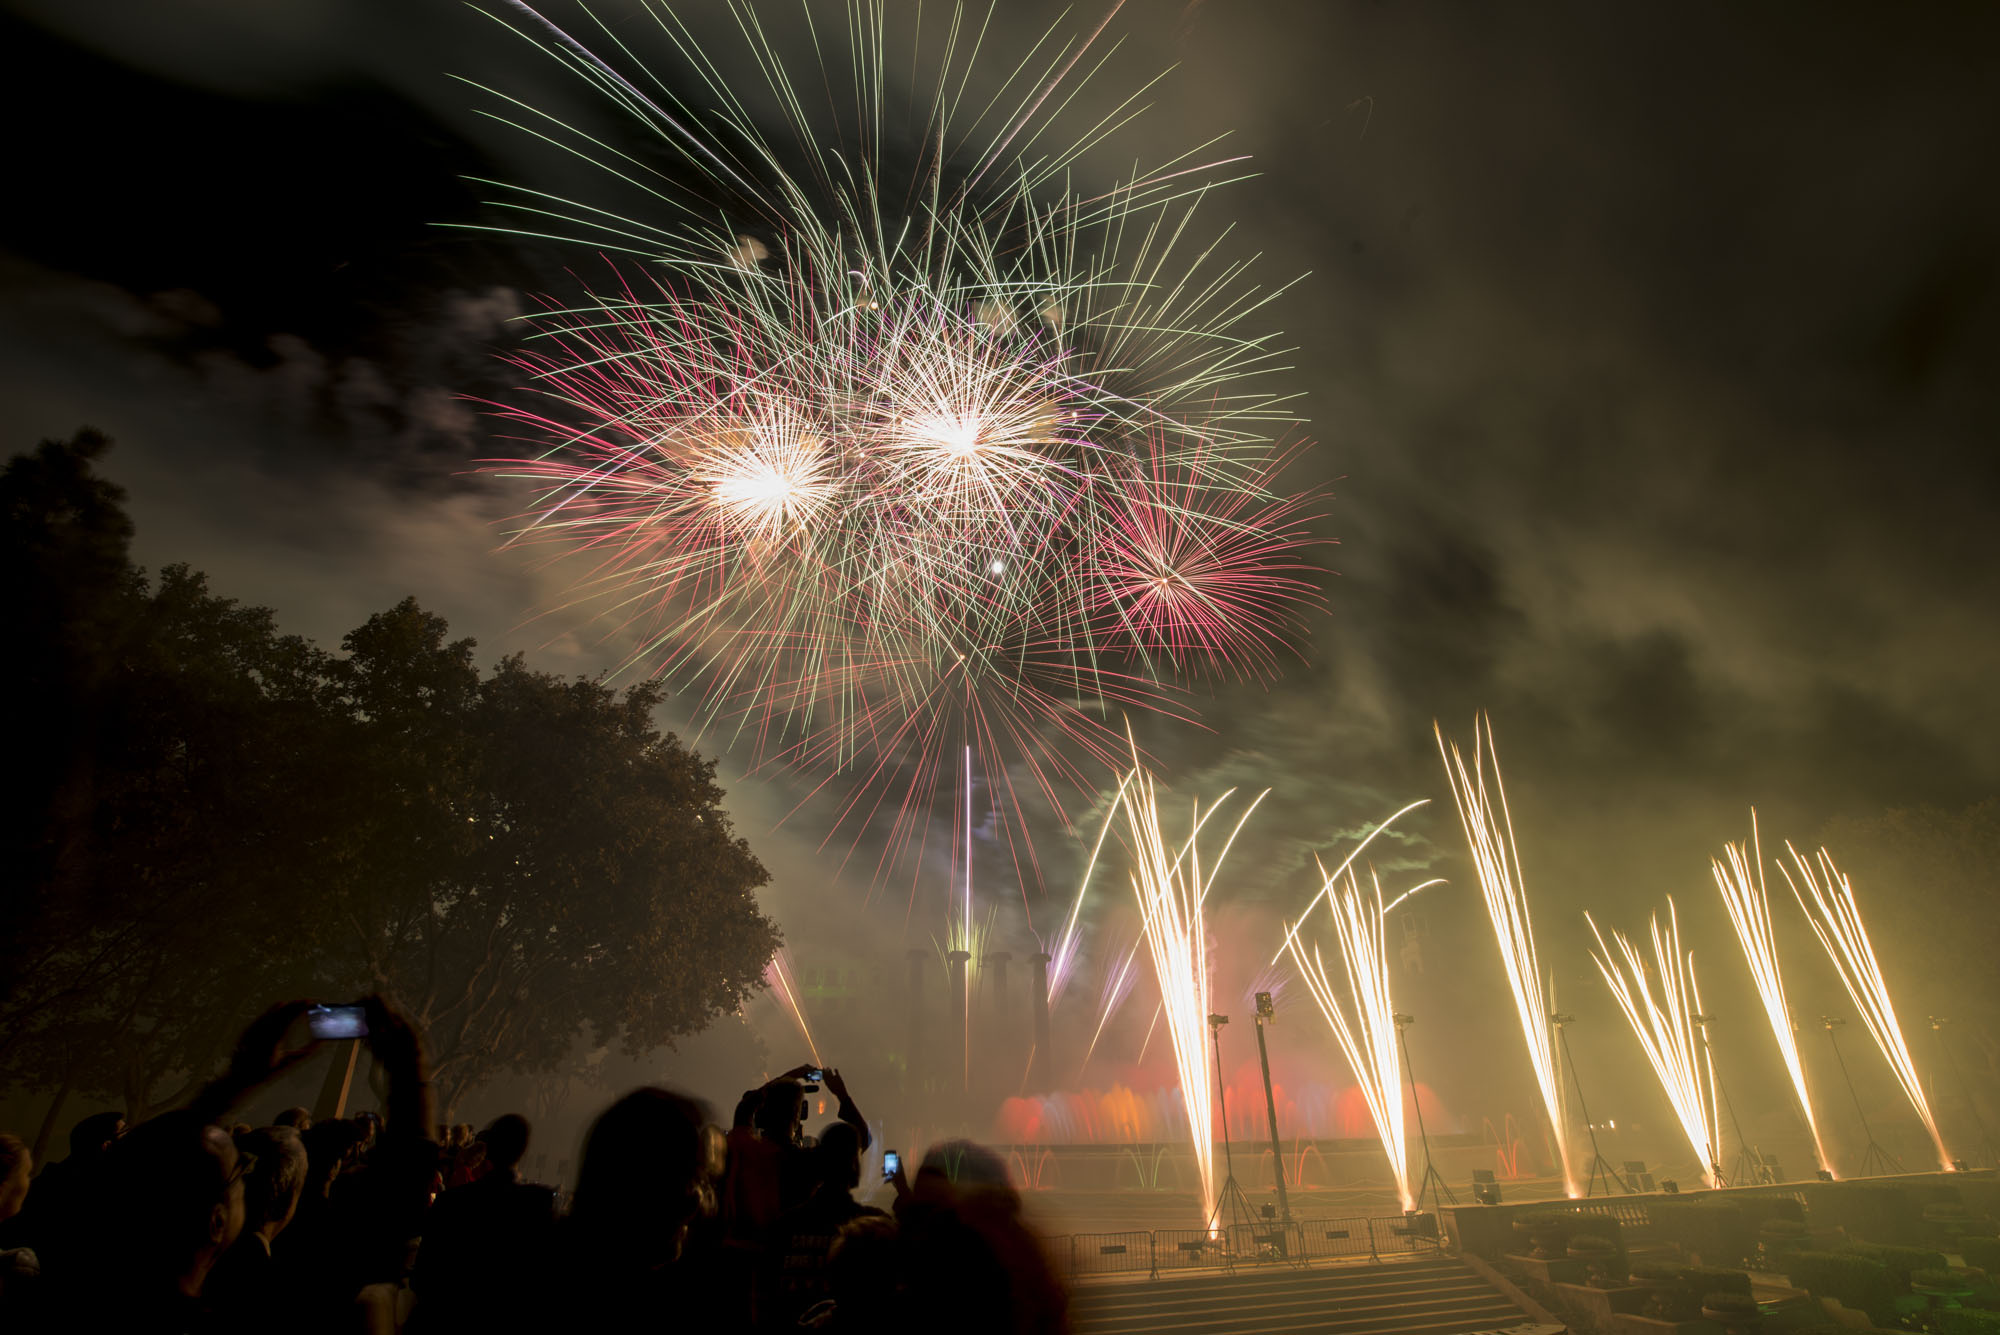 Fireworks show set to music from La Mercè festival 2015 (by Pep Herrero)